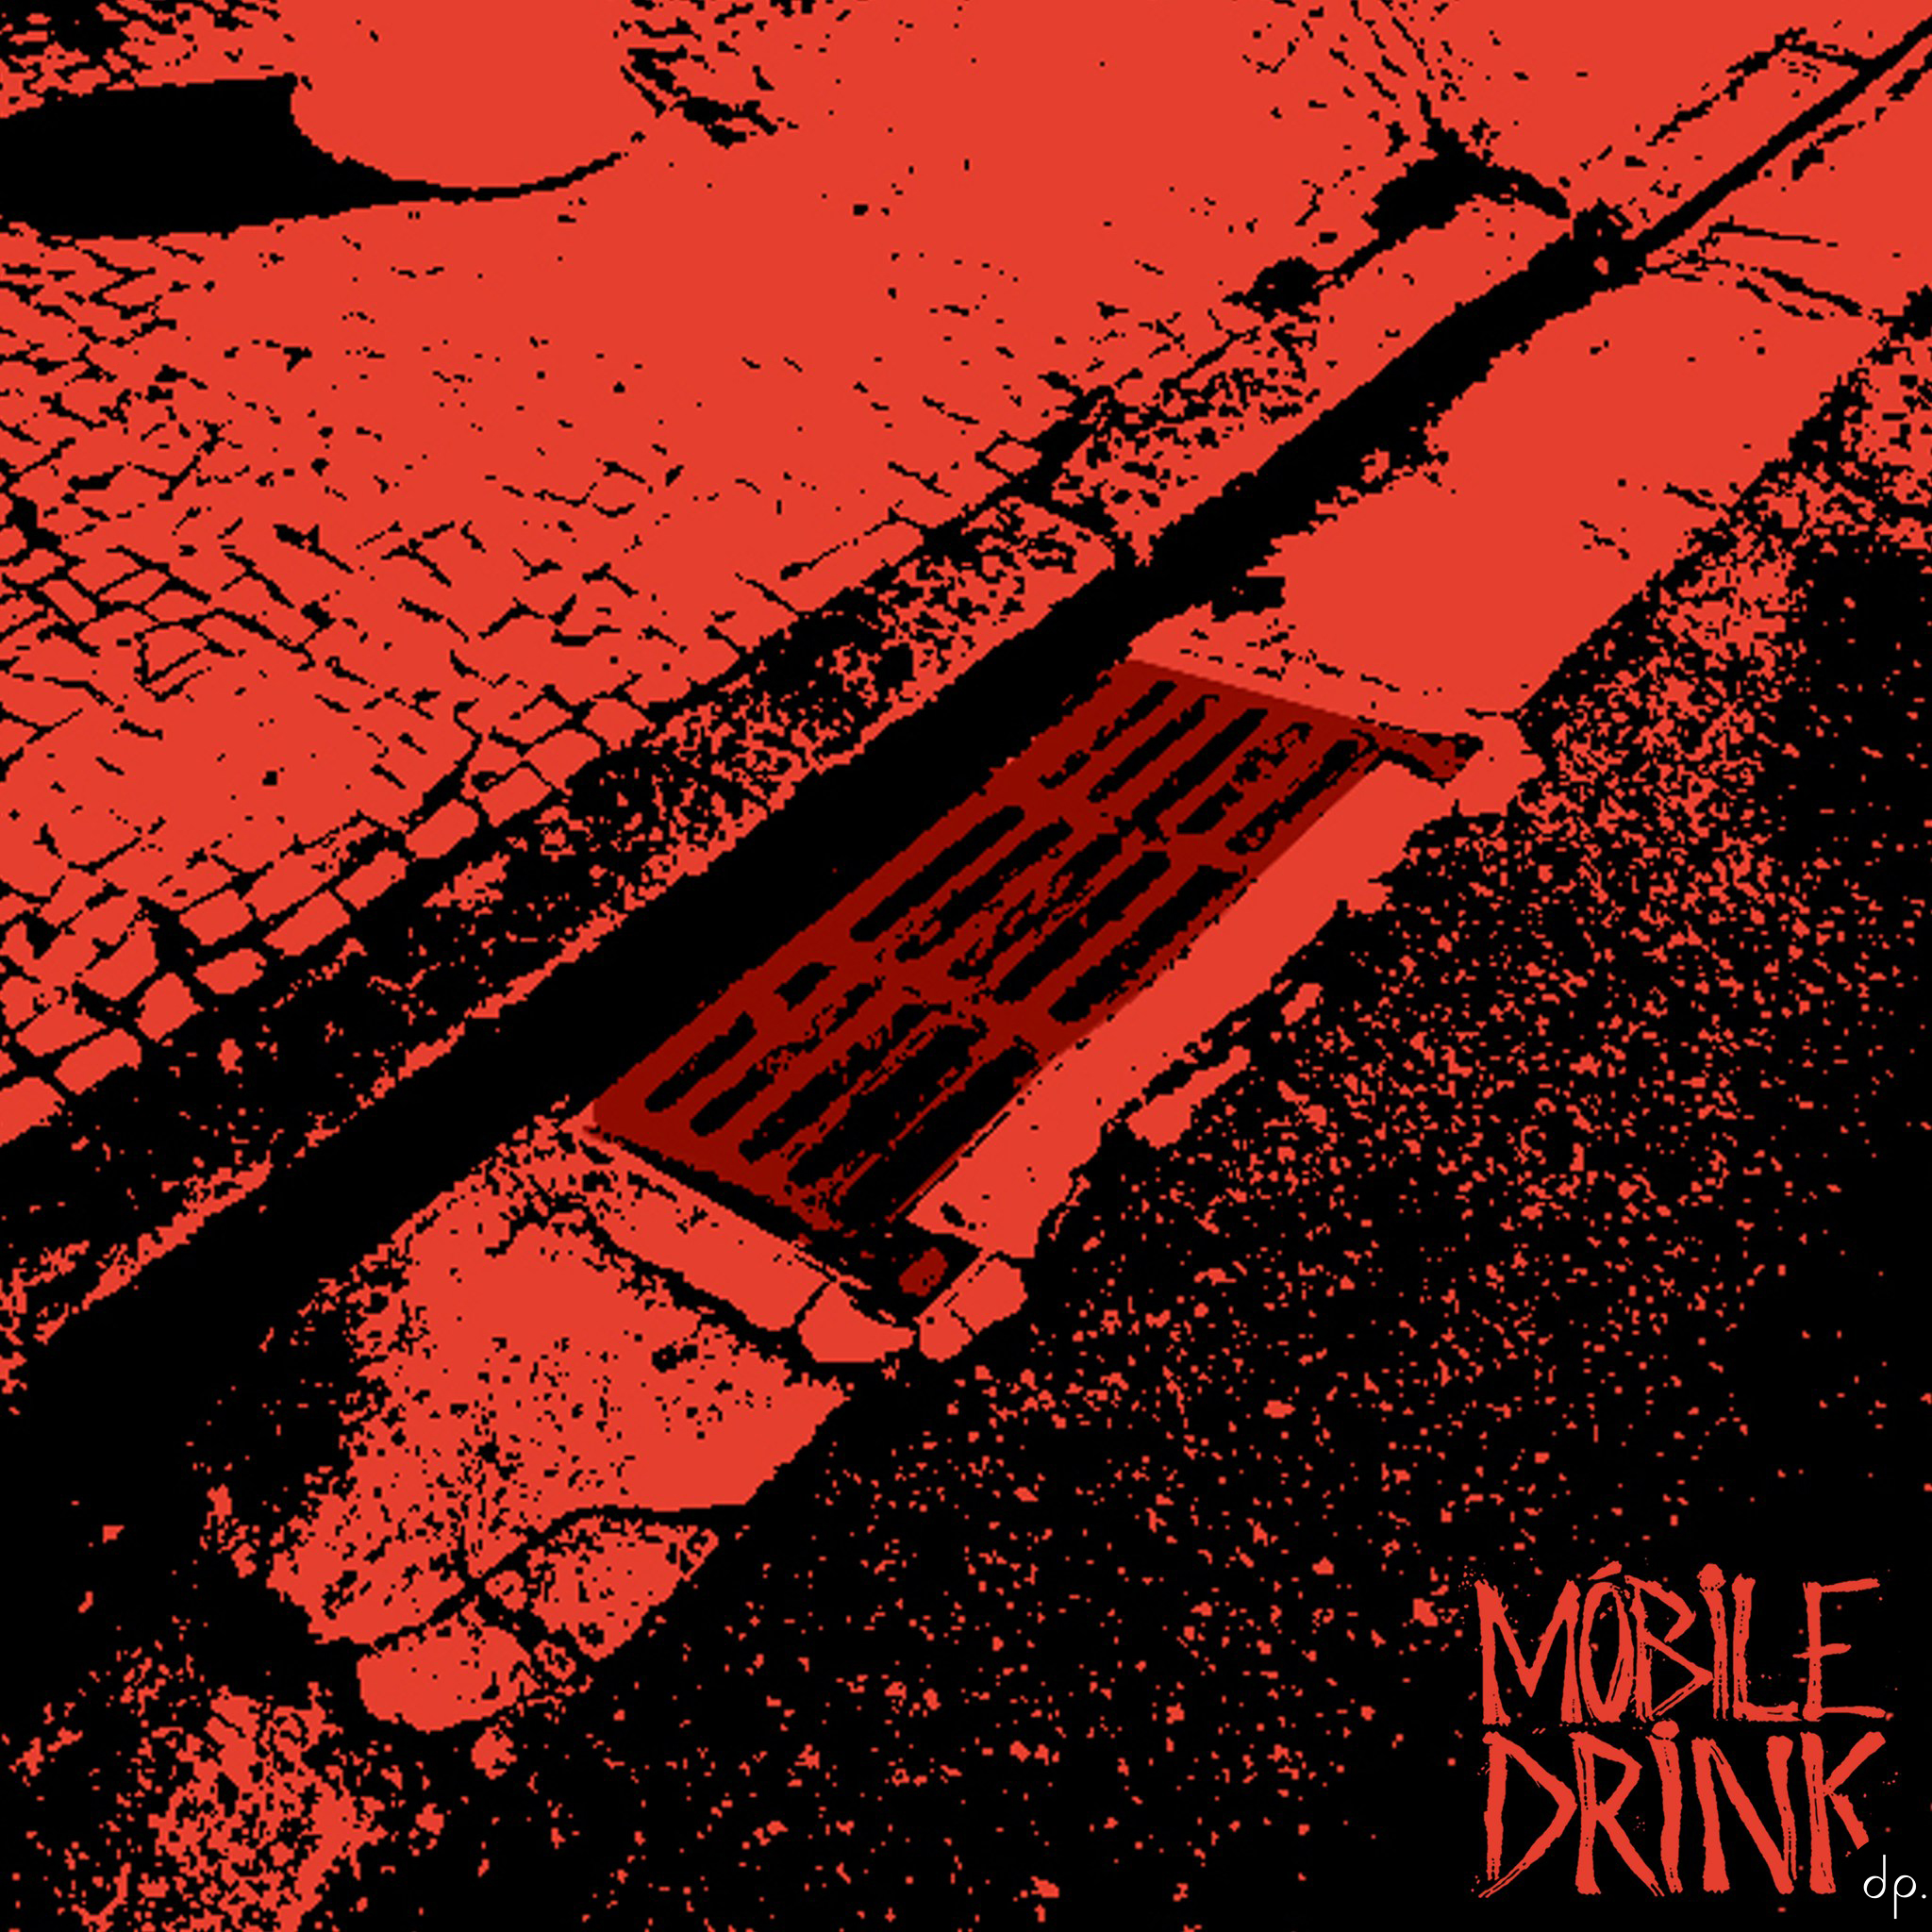 Móbile Drink - Móbile Drink